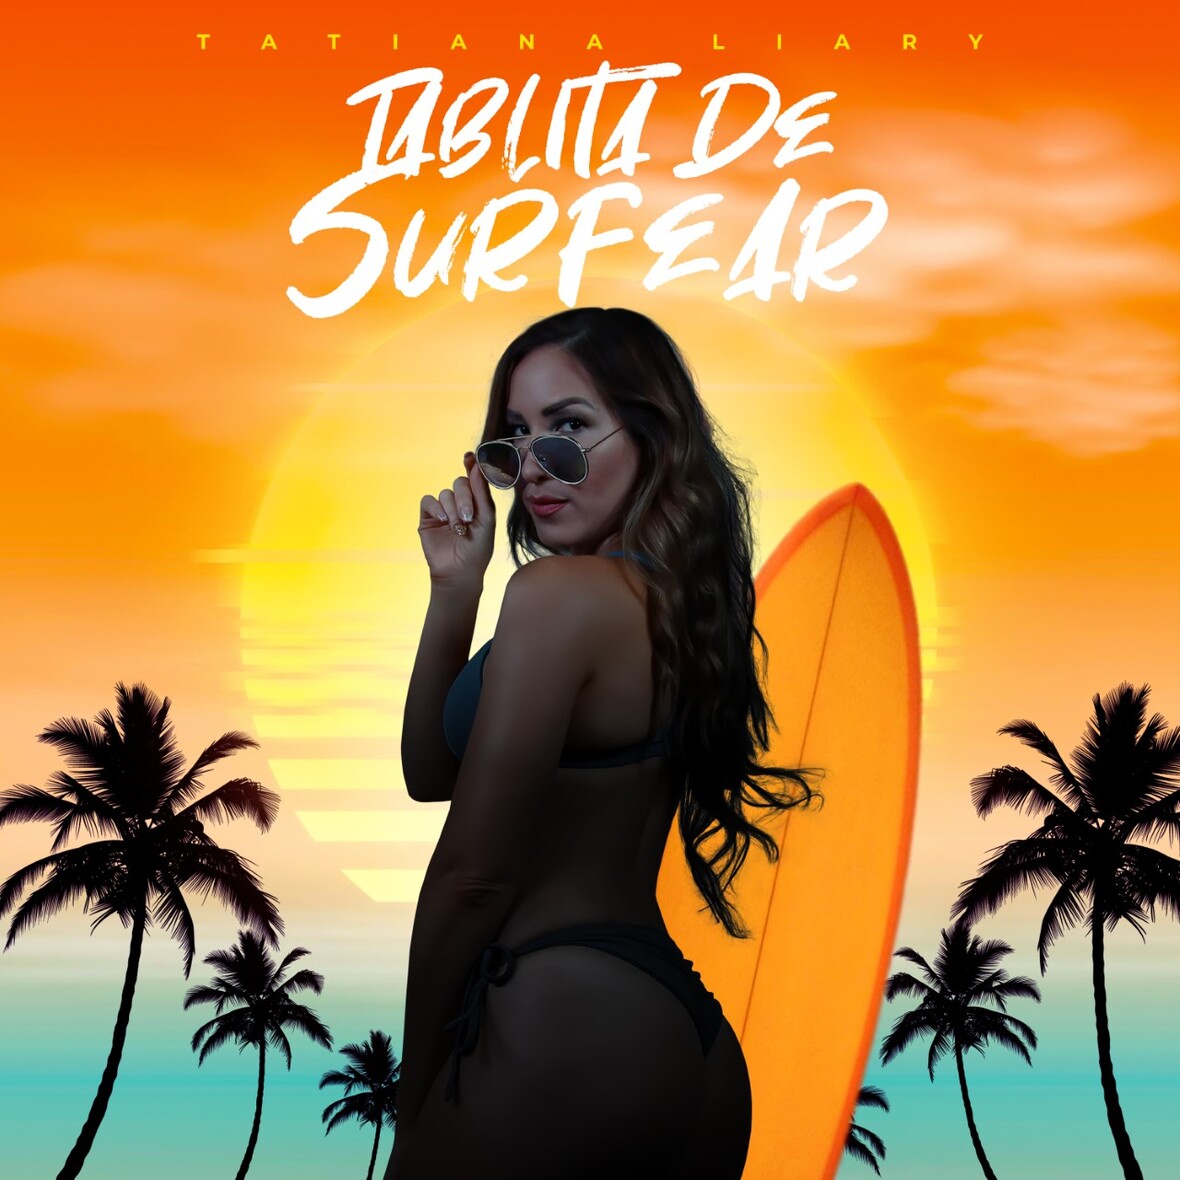 TATIANA LIARY lanza nuevo sencillo “Tablita de Surfear”